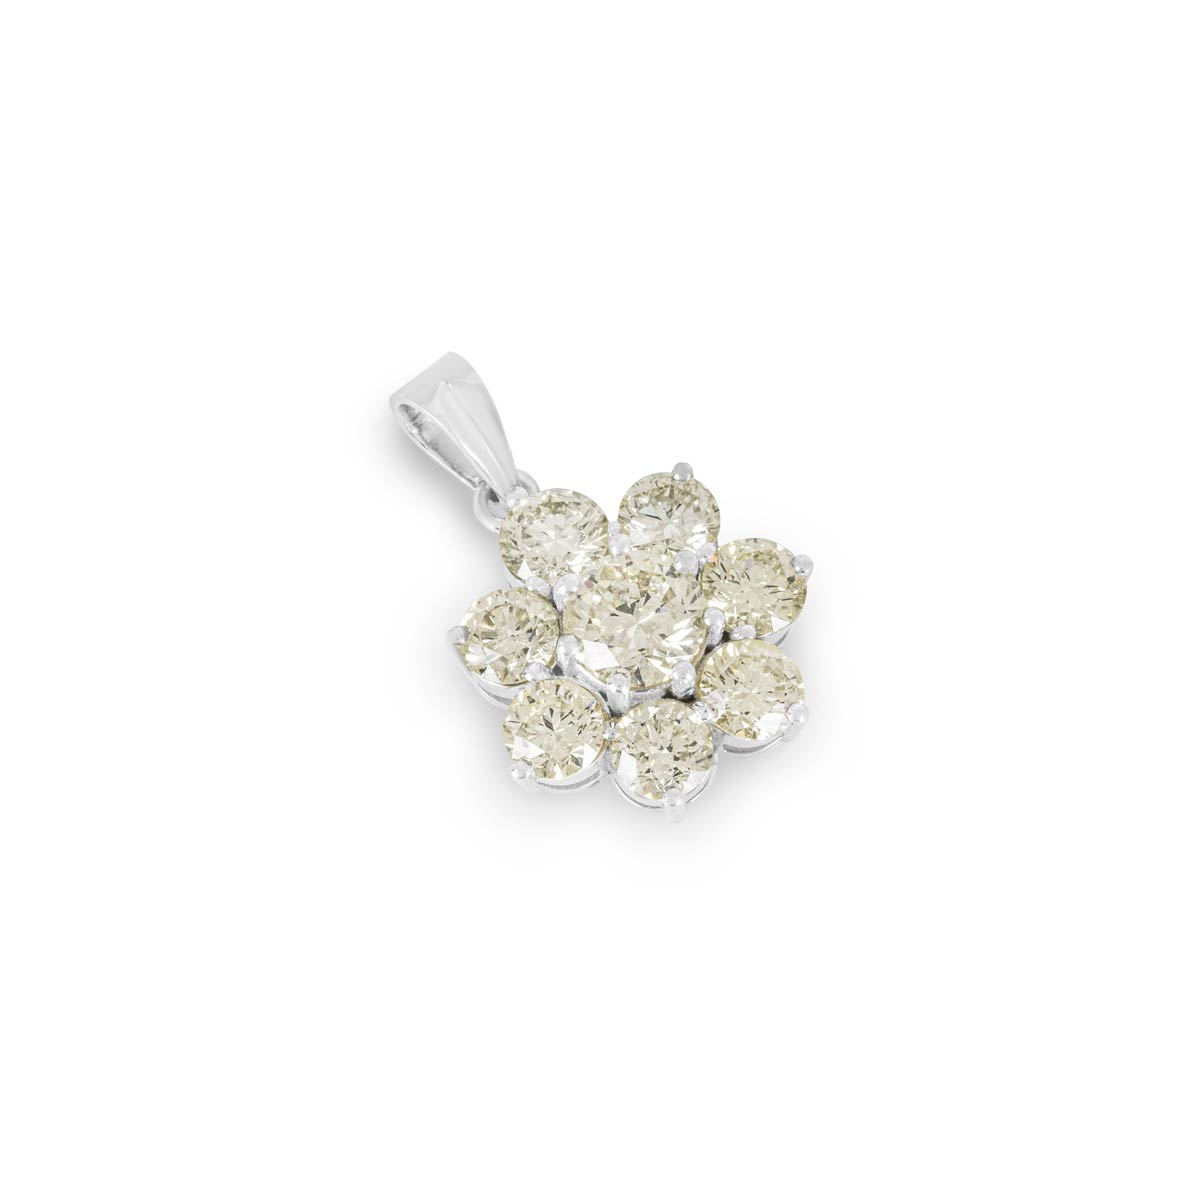 White Gold Diamond Flower Pendant 7.05ct TDW